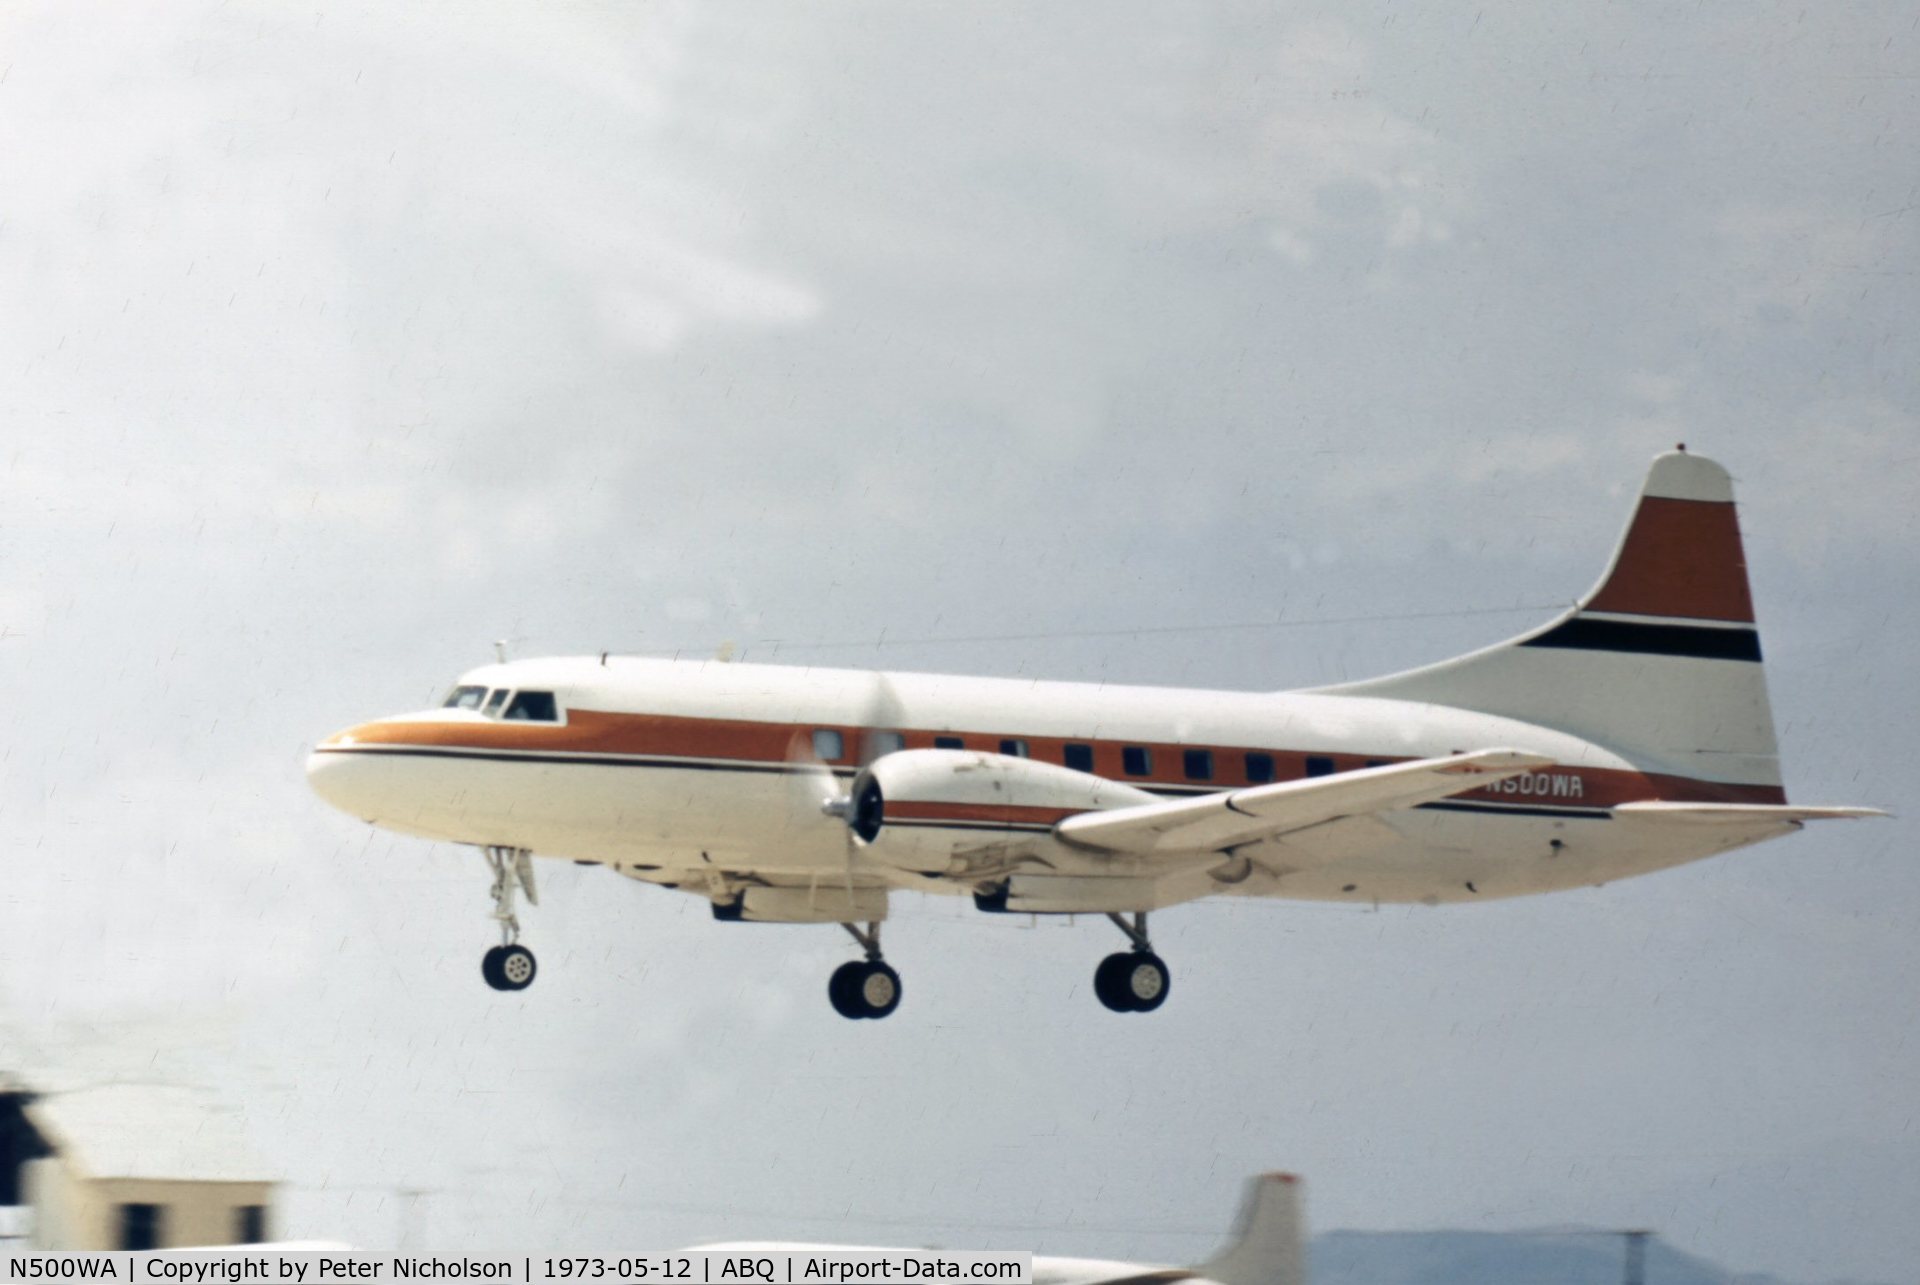 N500WA, 1950 Convair 240 C/N 166, Operated by Westernair in 1973 when seen at Albuquerque.